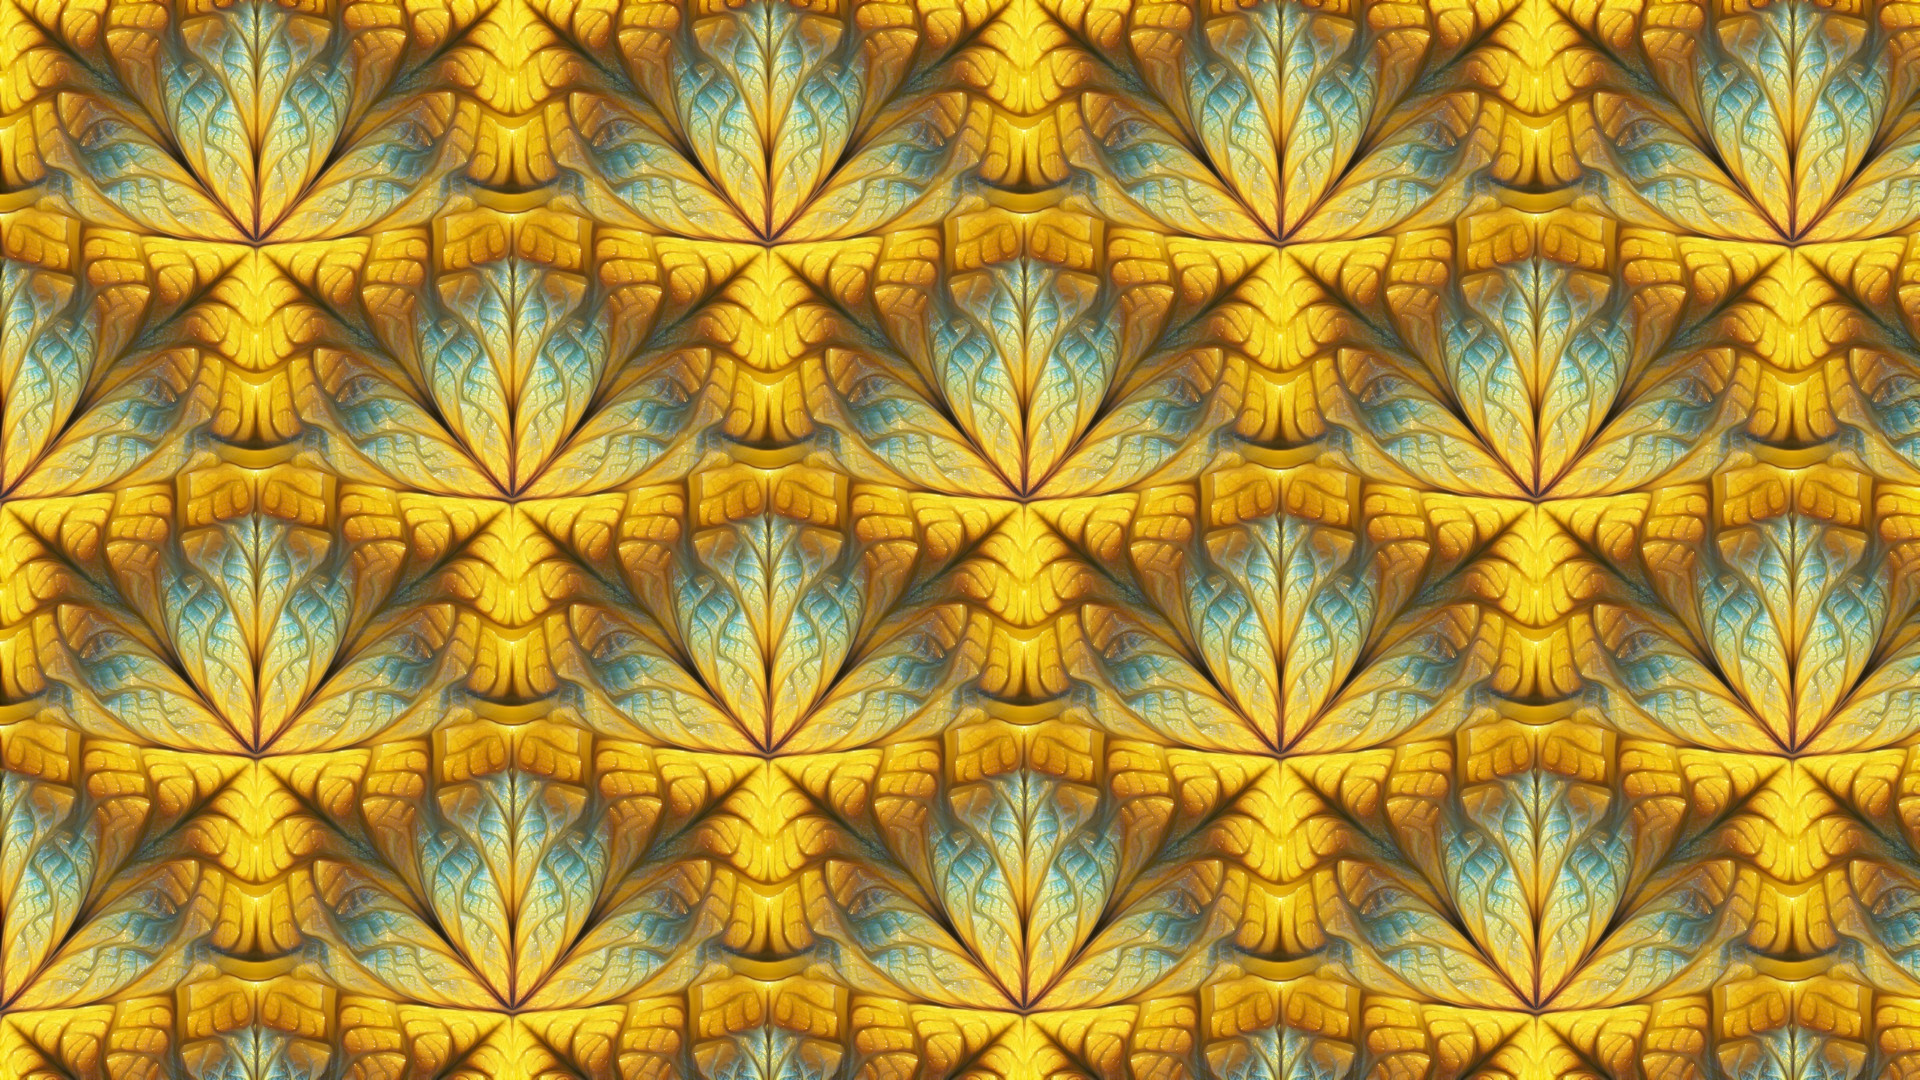 General 1920x1080 abstract fractal digital art pattern